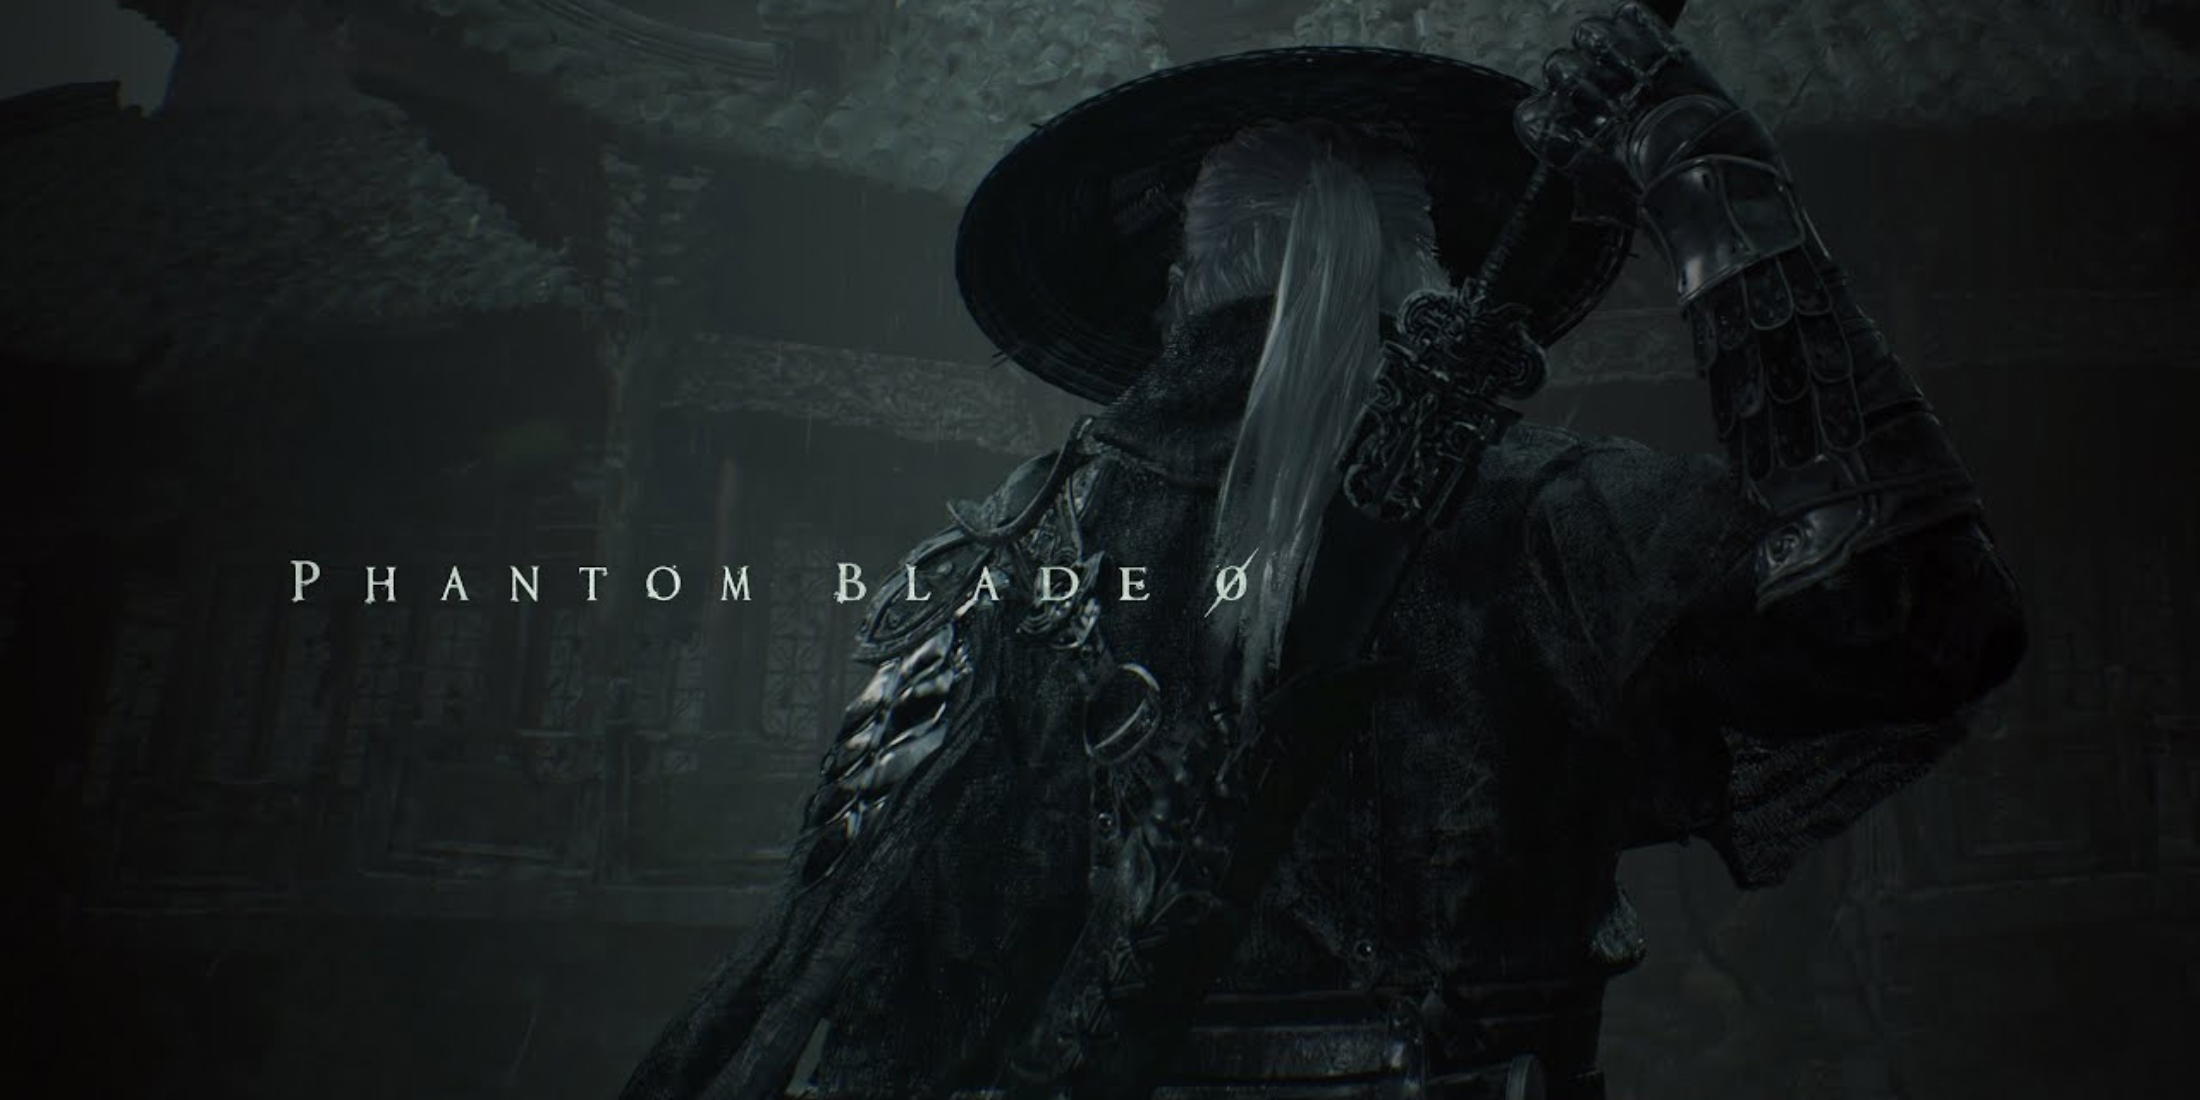 Phantom Blade 0: New Hack 'N' Slash Action RPG Announced for PS5 [PlayStation Showcase]